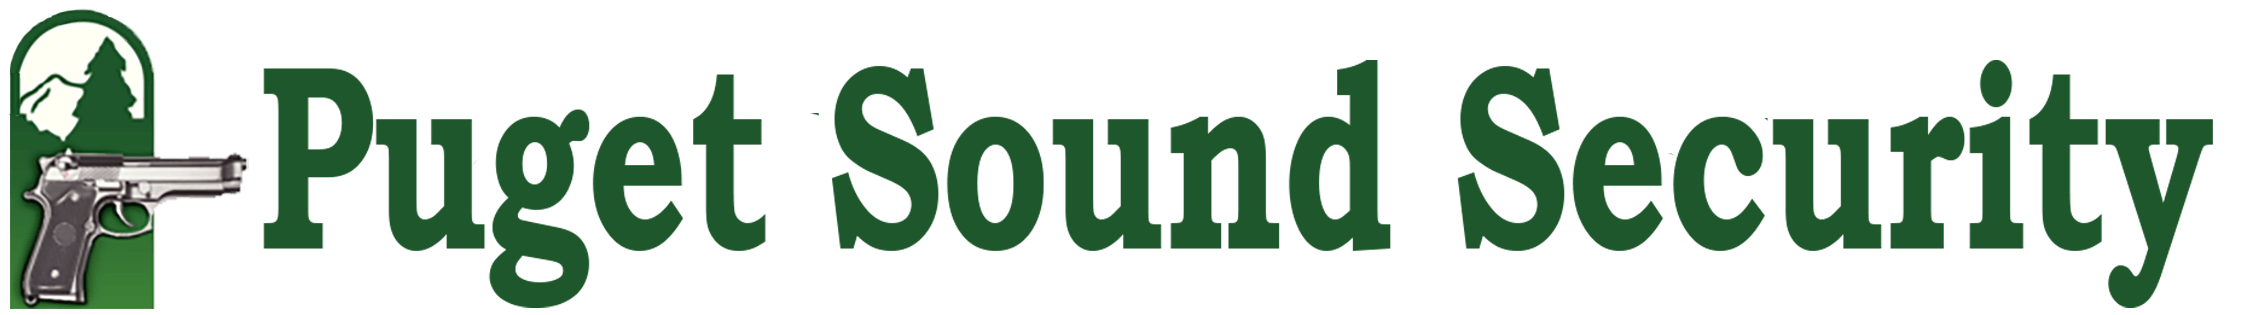 Puget Sound Security logo